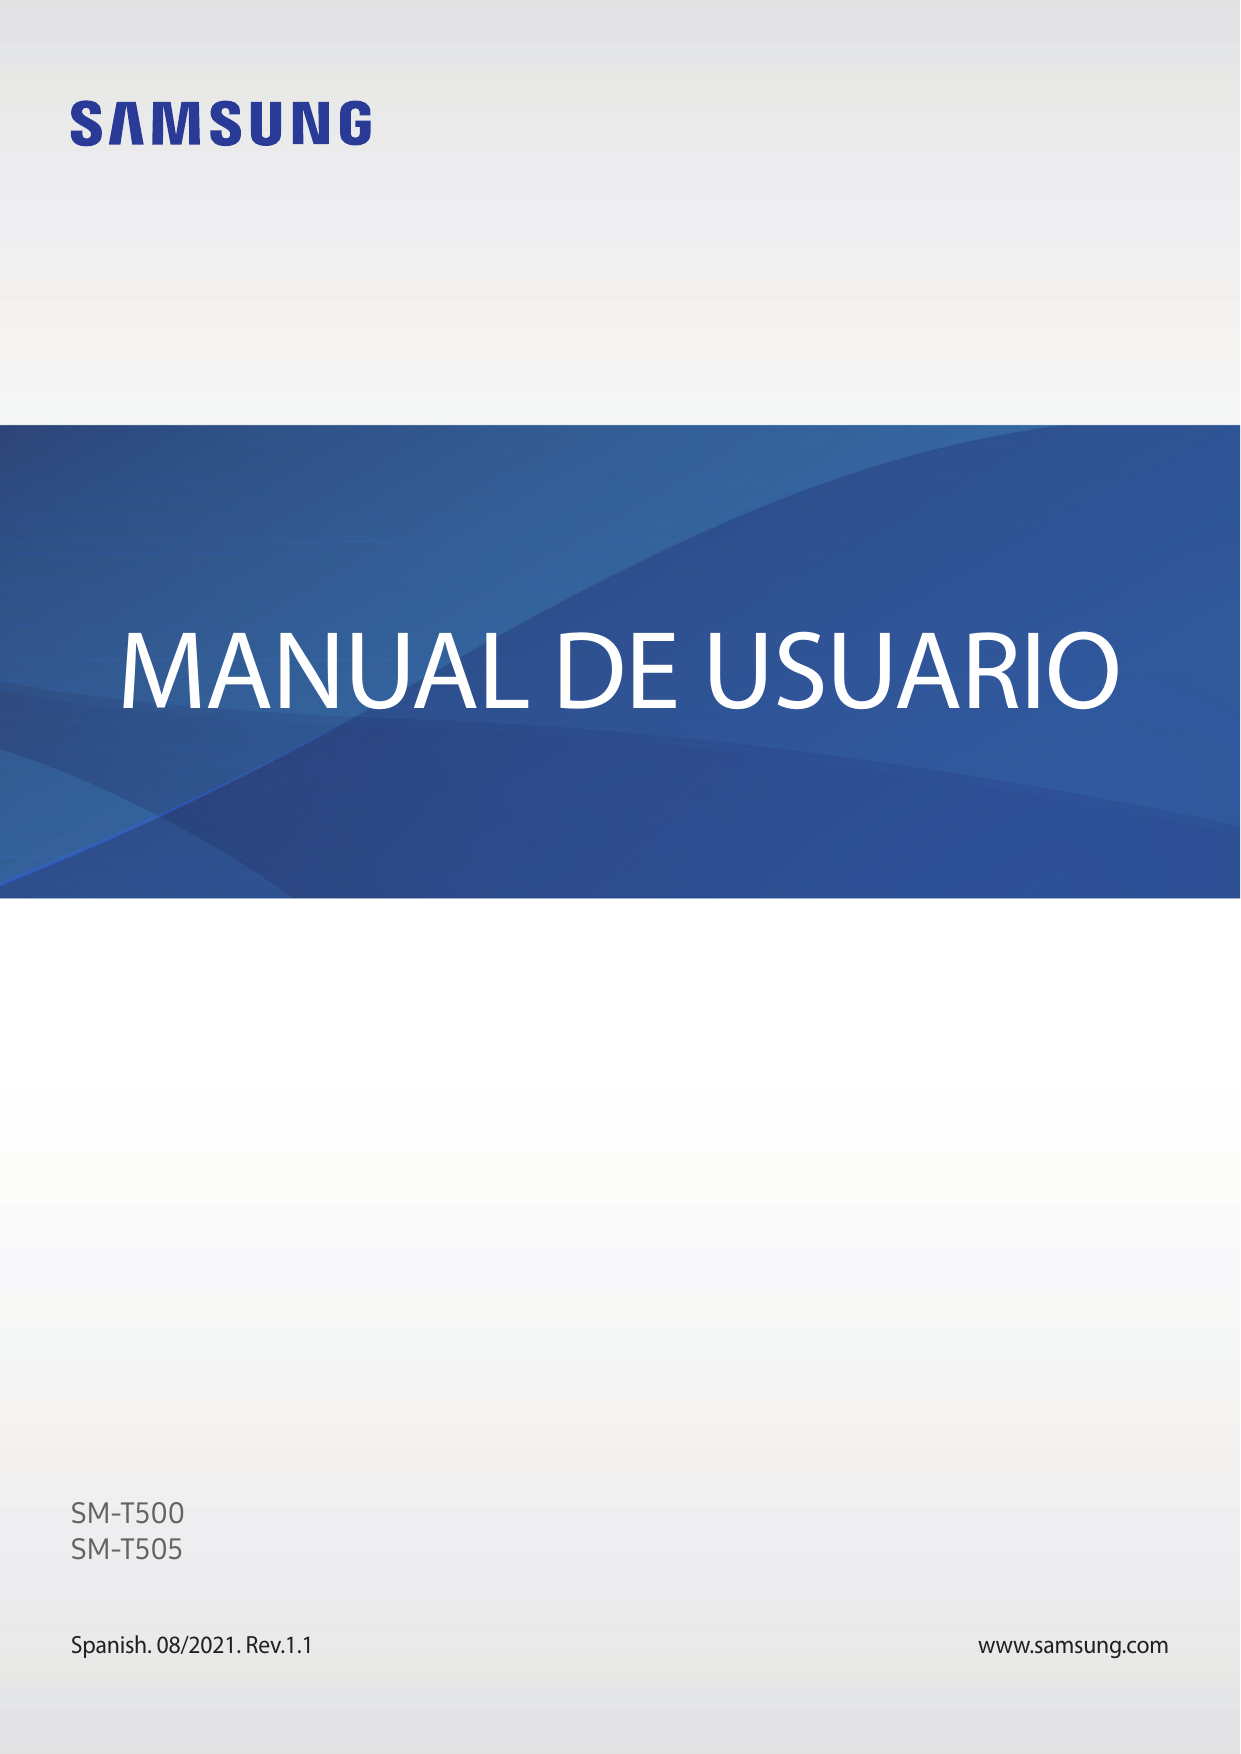 MANUAL DE USUARIOSM-T500SM-T505Spanish. 08/2021. Rev.1.1www.samsung.com